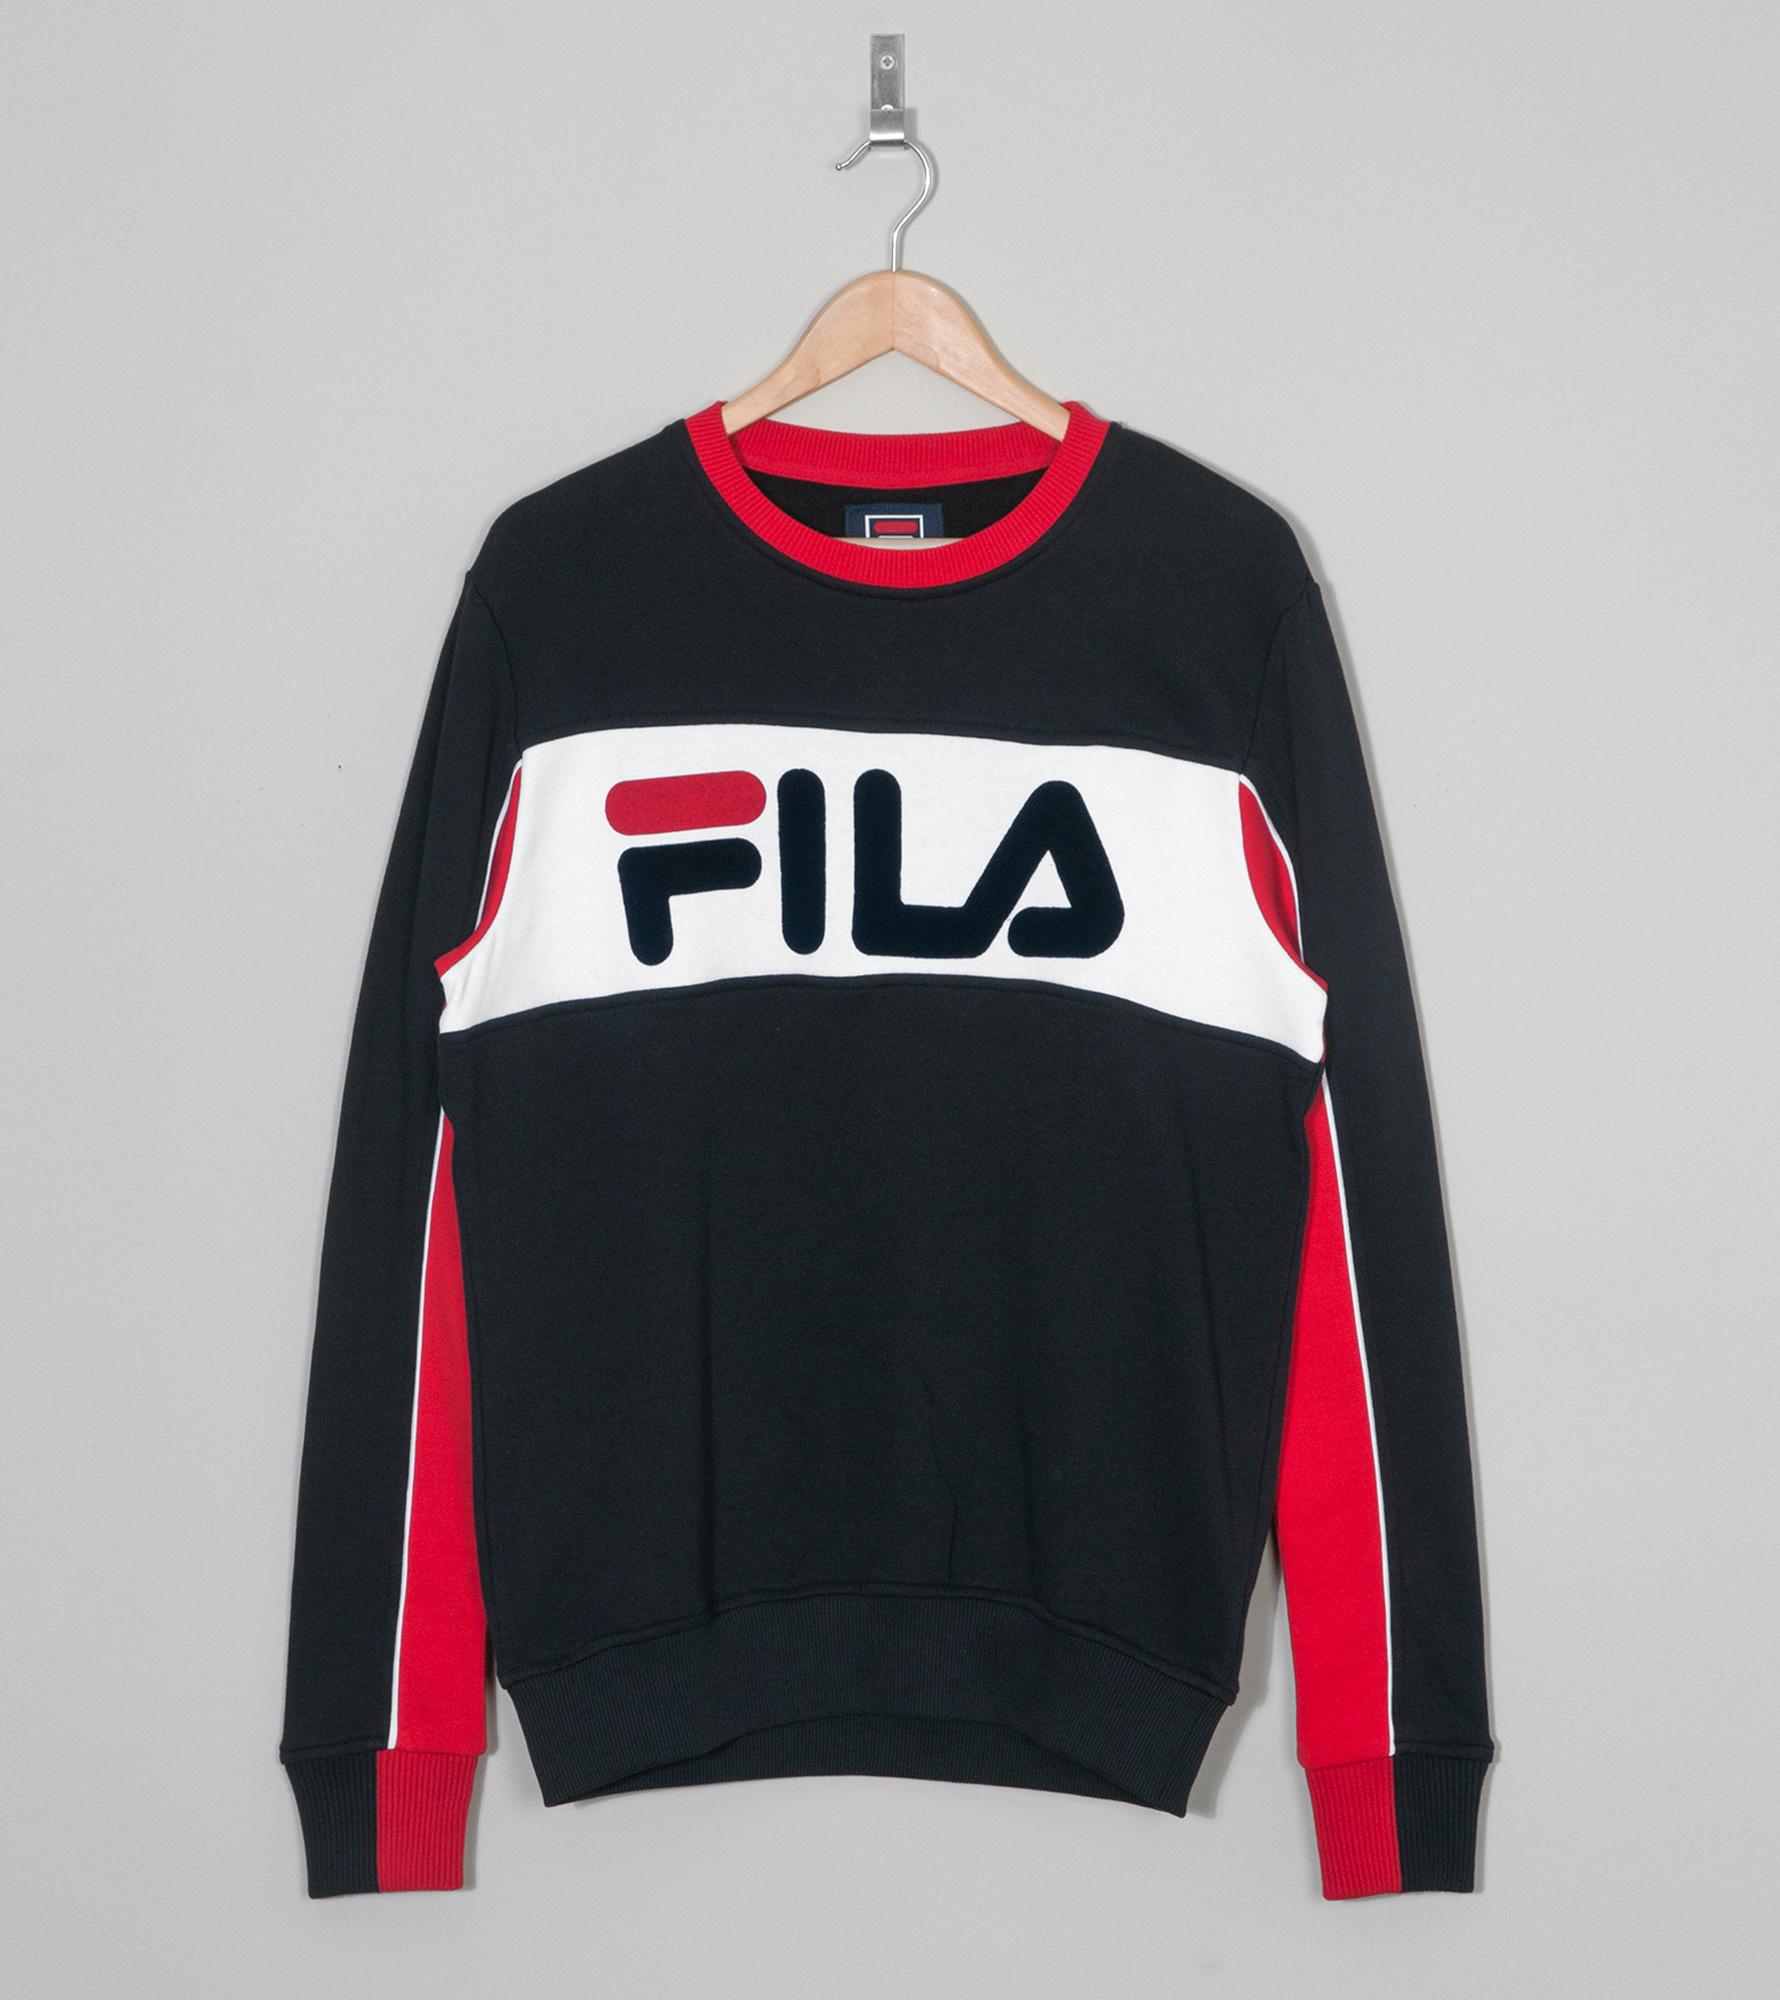 Buy Fila Bari Sweatshirt - Mens Fashion Online at Size?